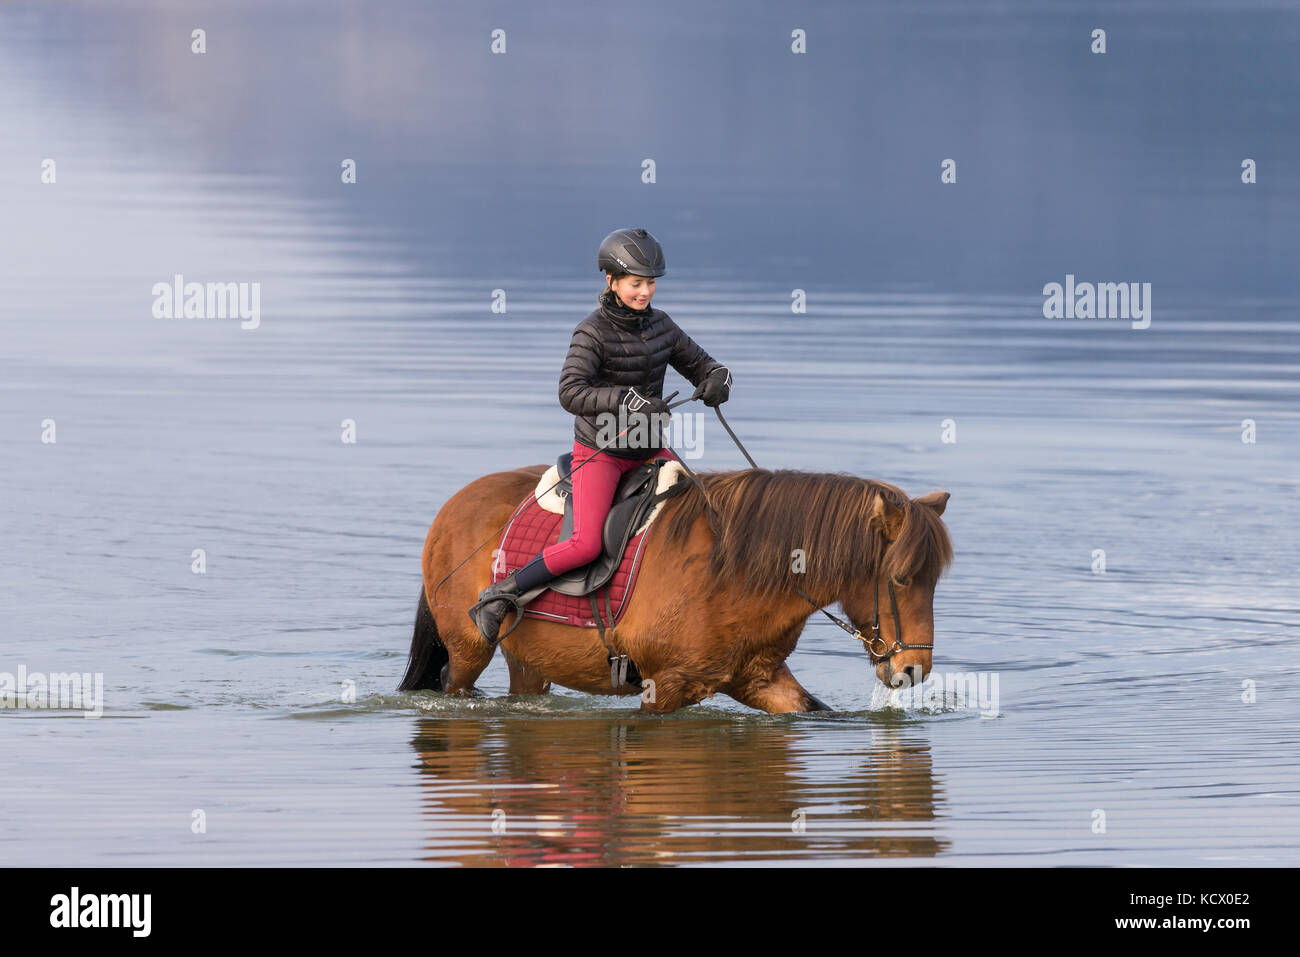 Young teen girl riding horse in ocean at a beach Stock Photo